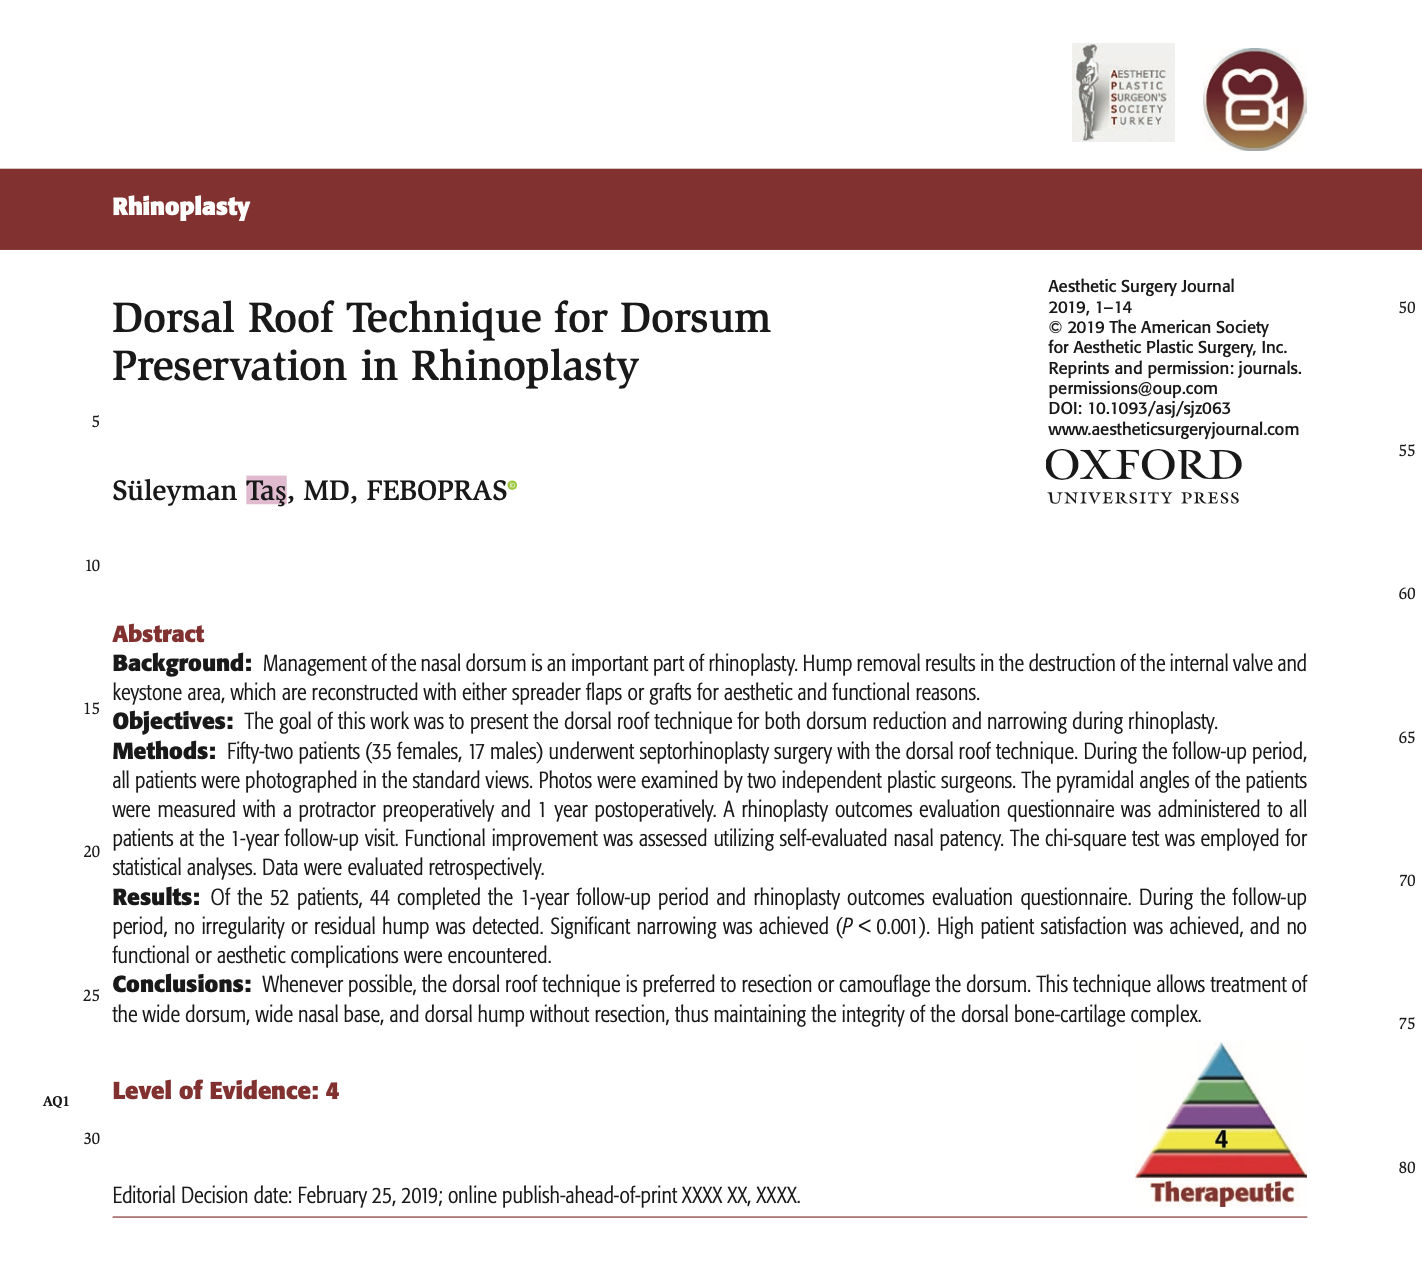 Dorsal roof technique for dorsum preservation in rhinoplasty